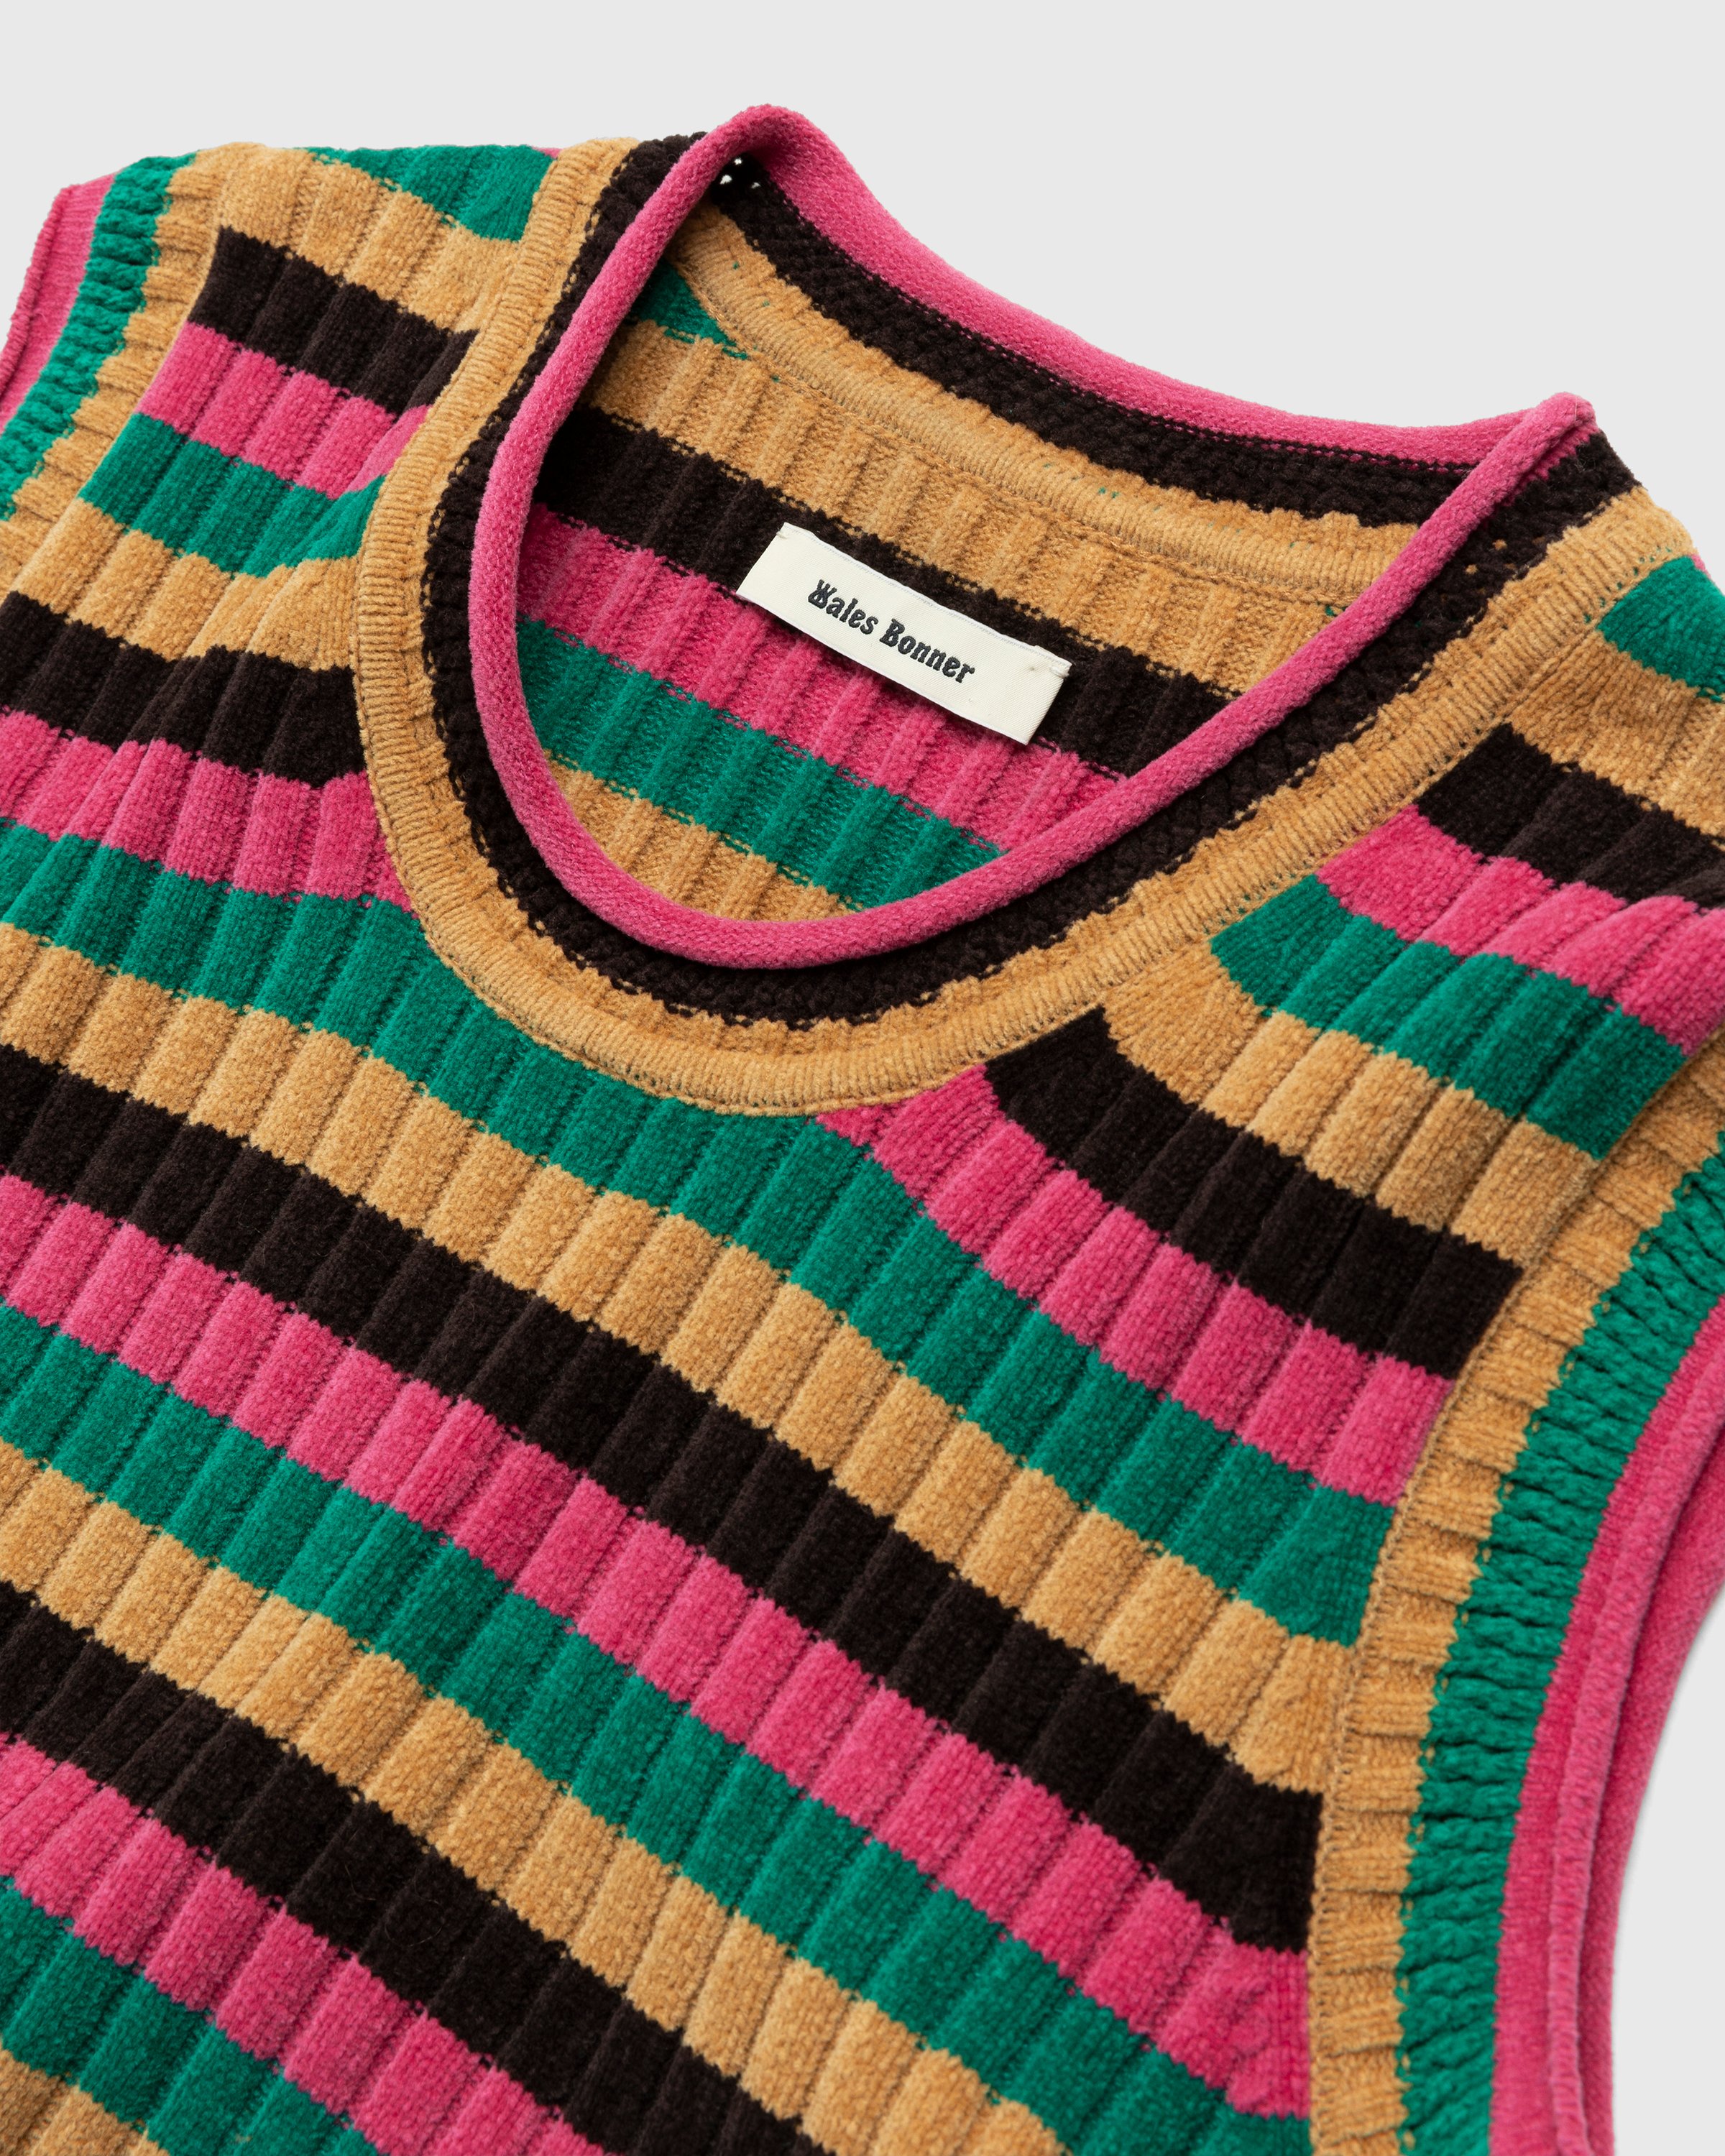 Wales Bonner - Swing Stripe Knit Vest Multi - Clothing - Multi - Image 3